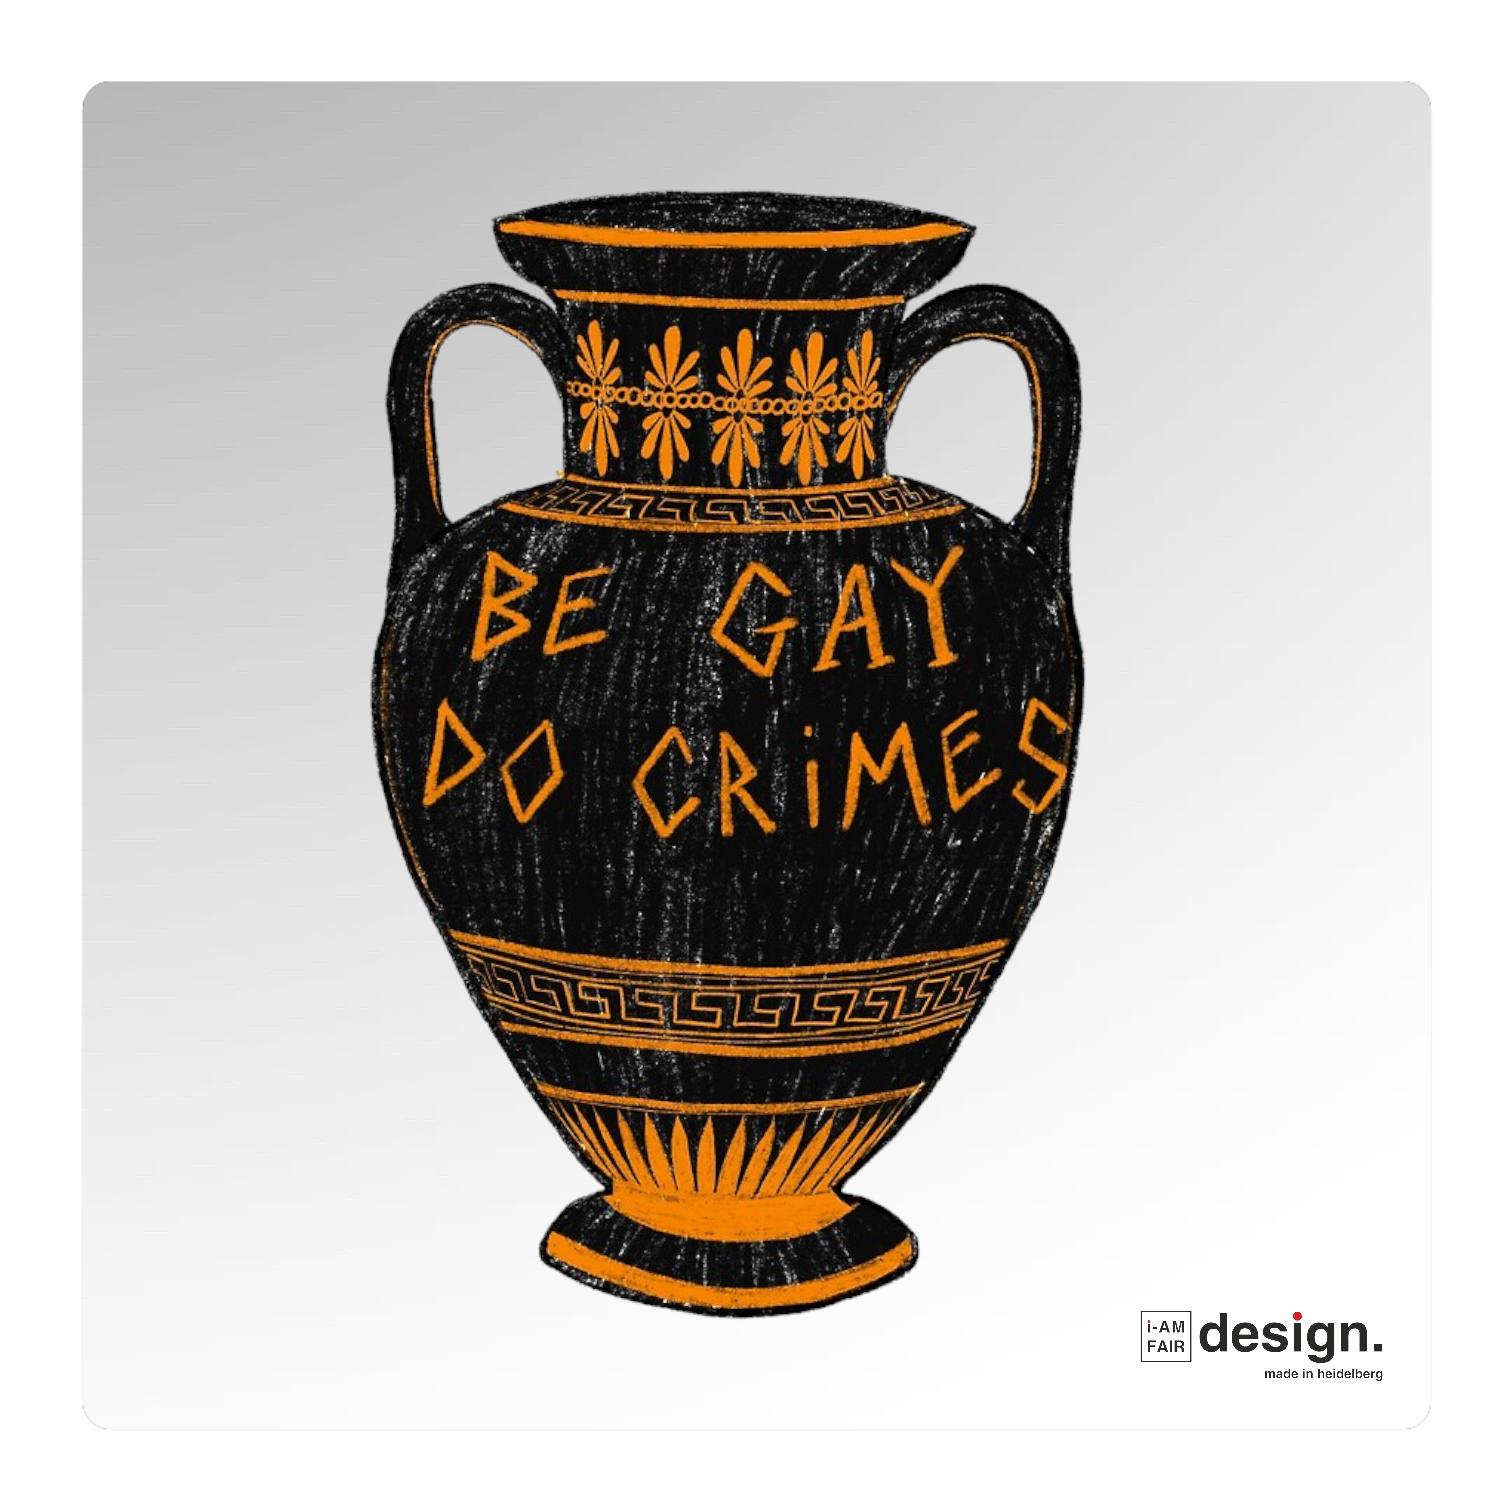 Bio-T-shirt "be gay, do crimes"